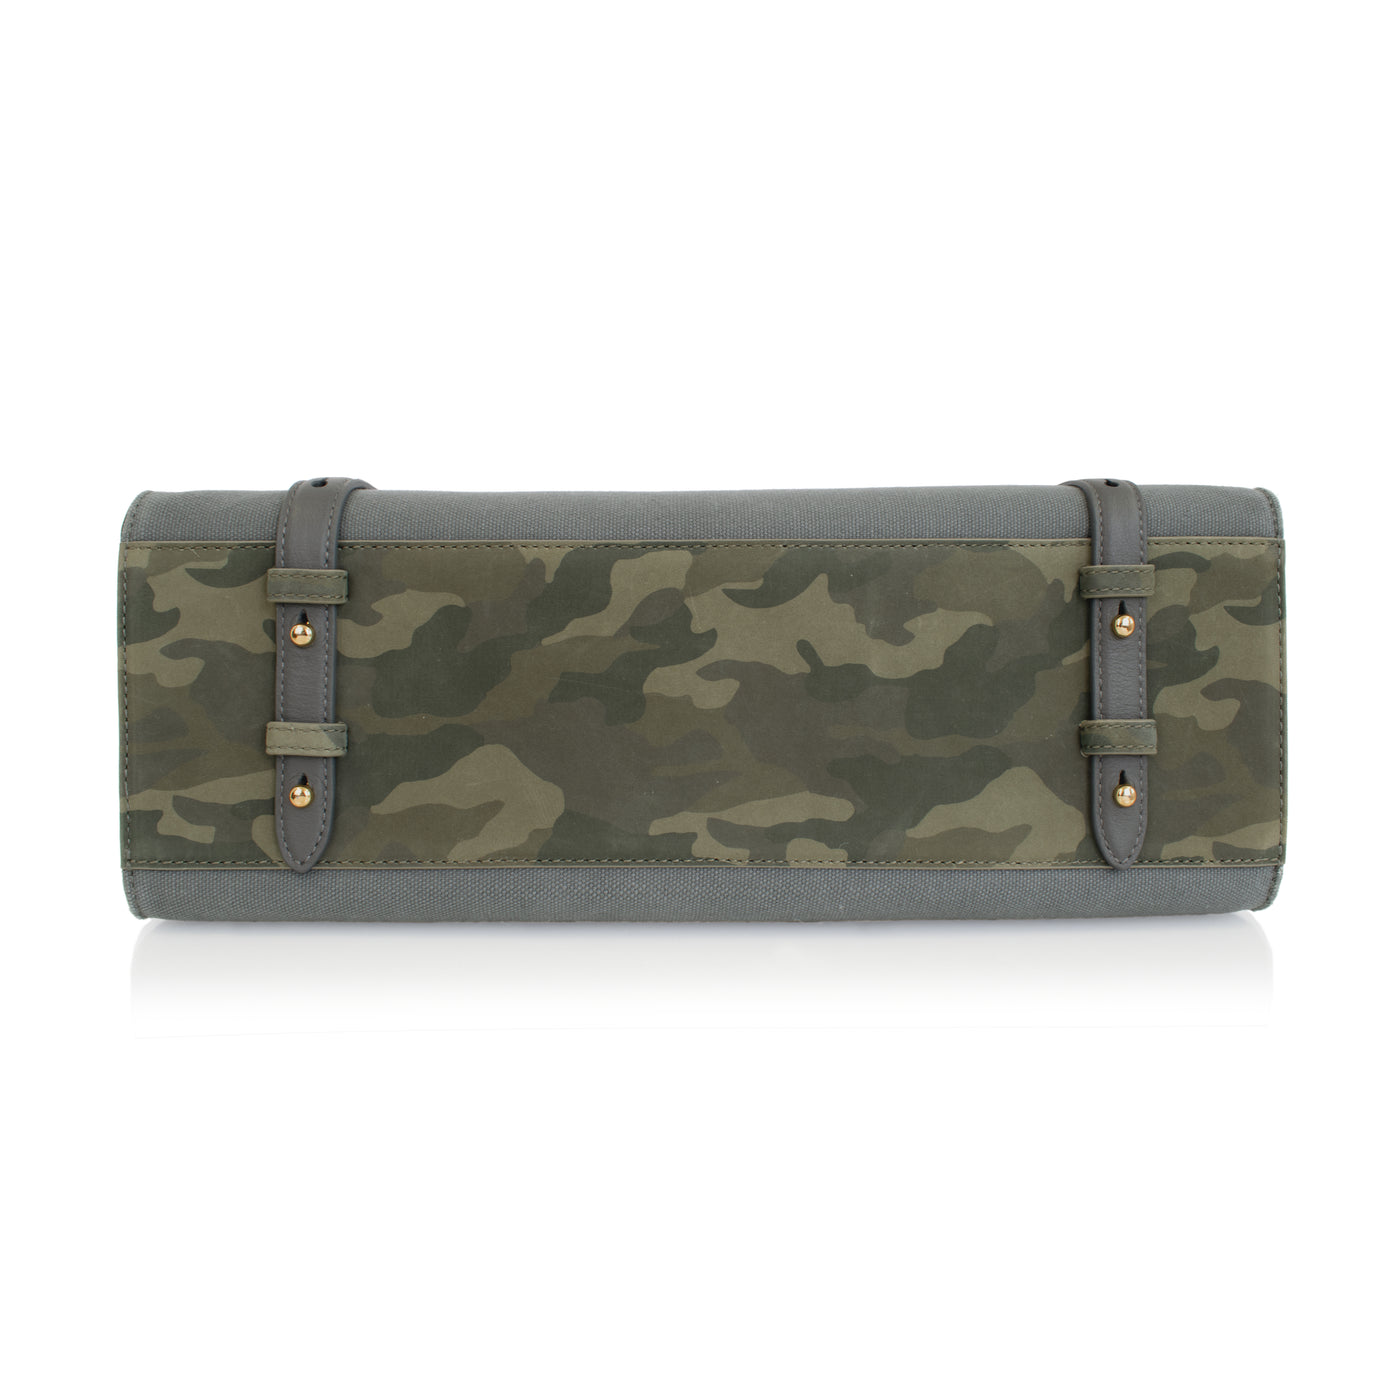 Tote Bag M | Backpack Bag